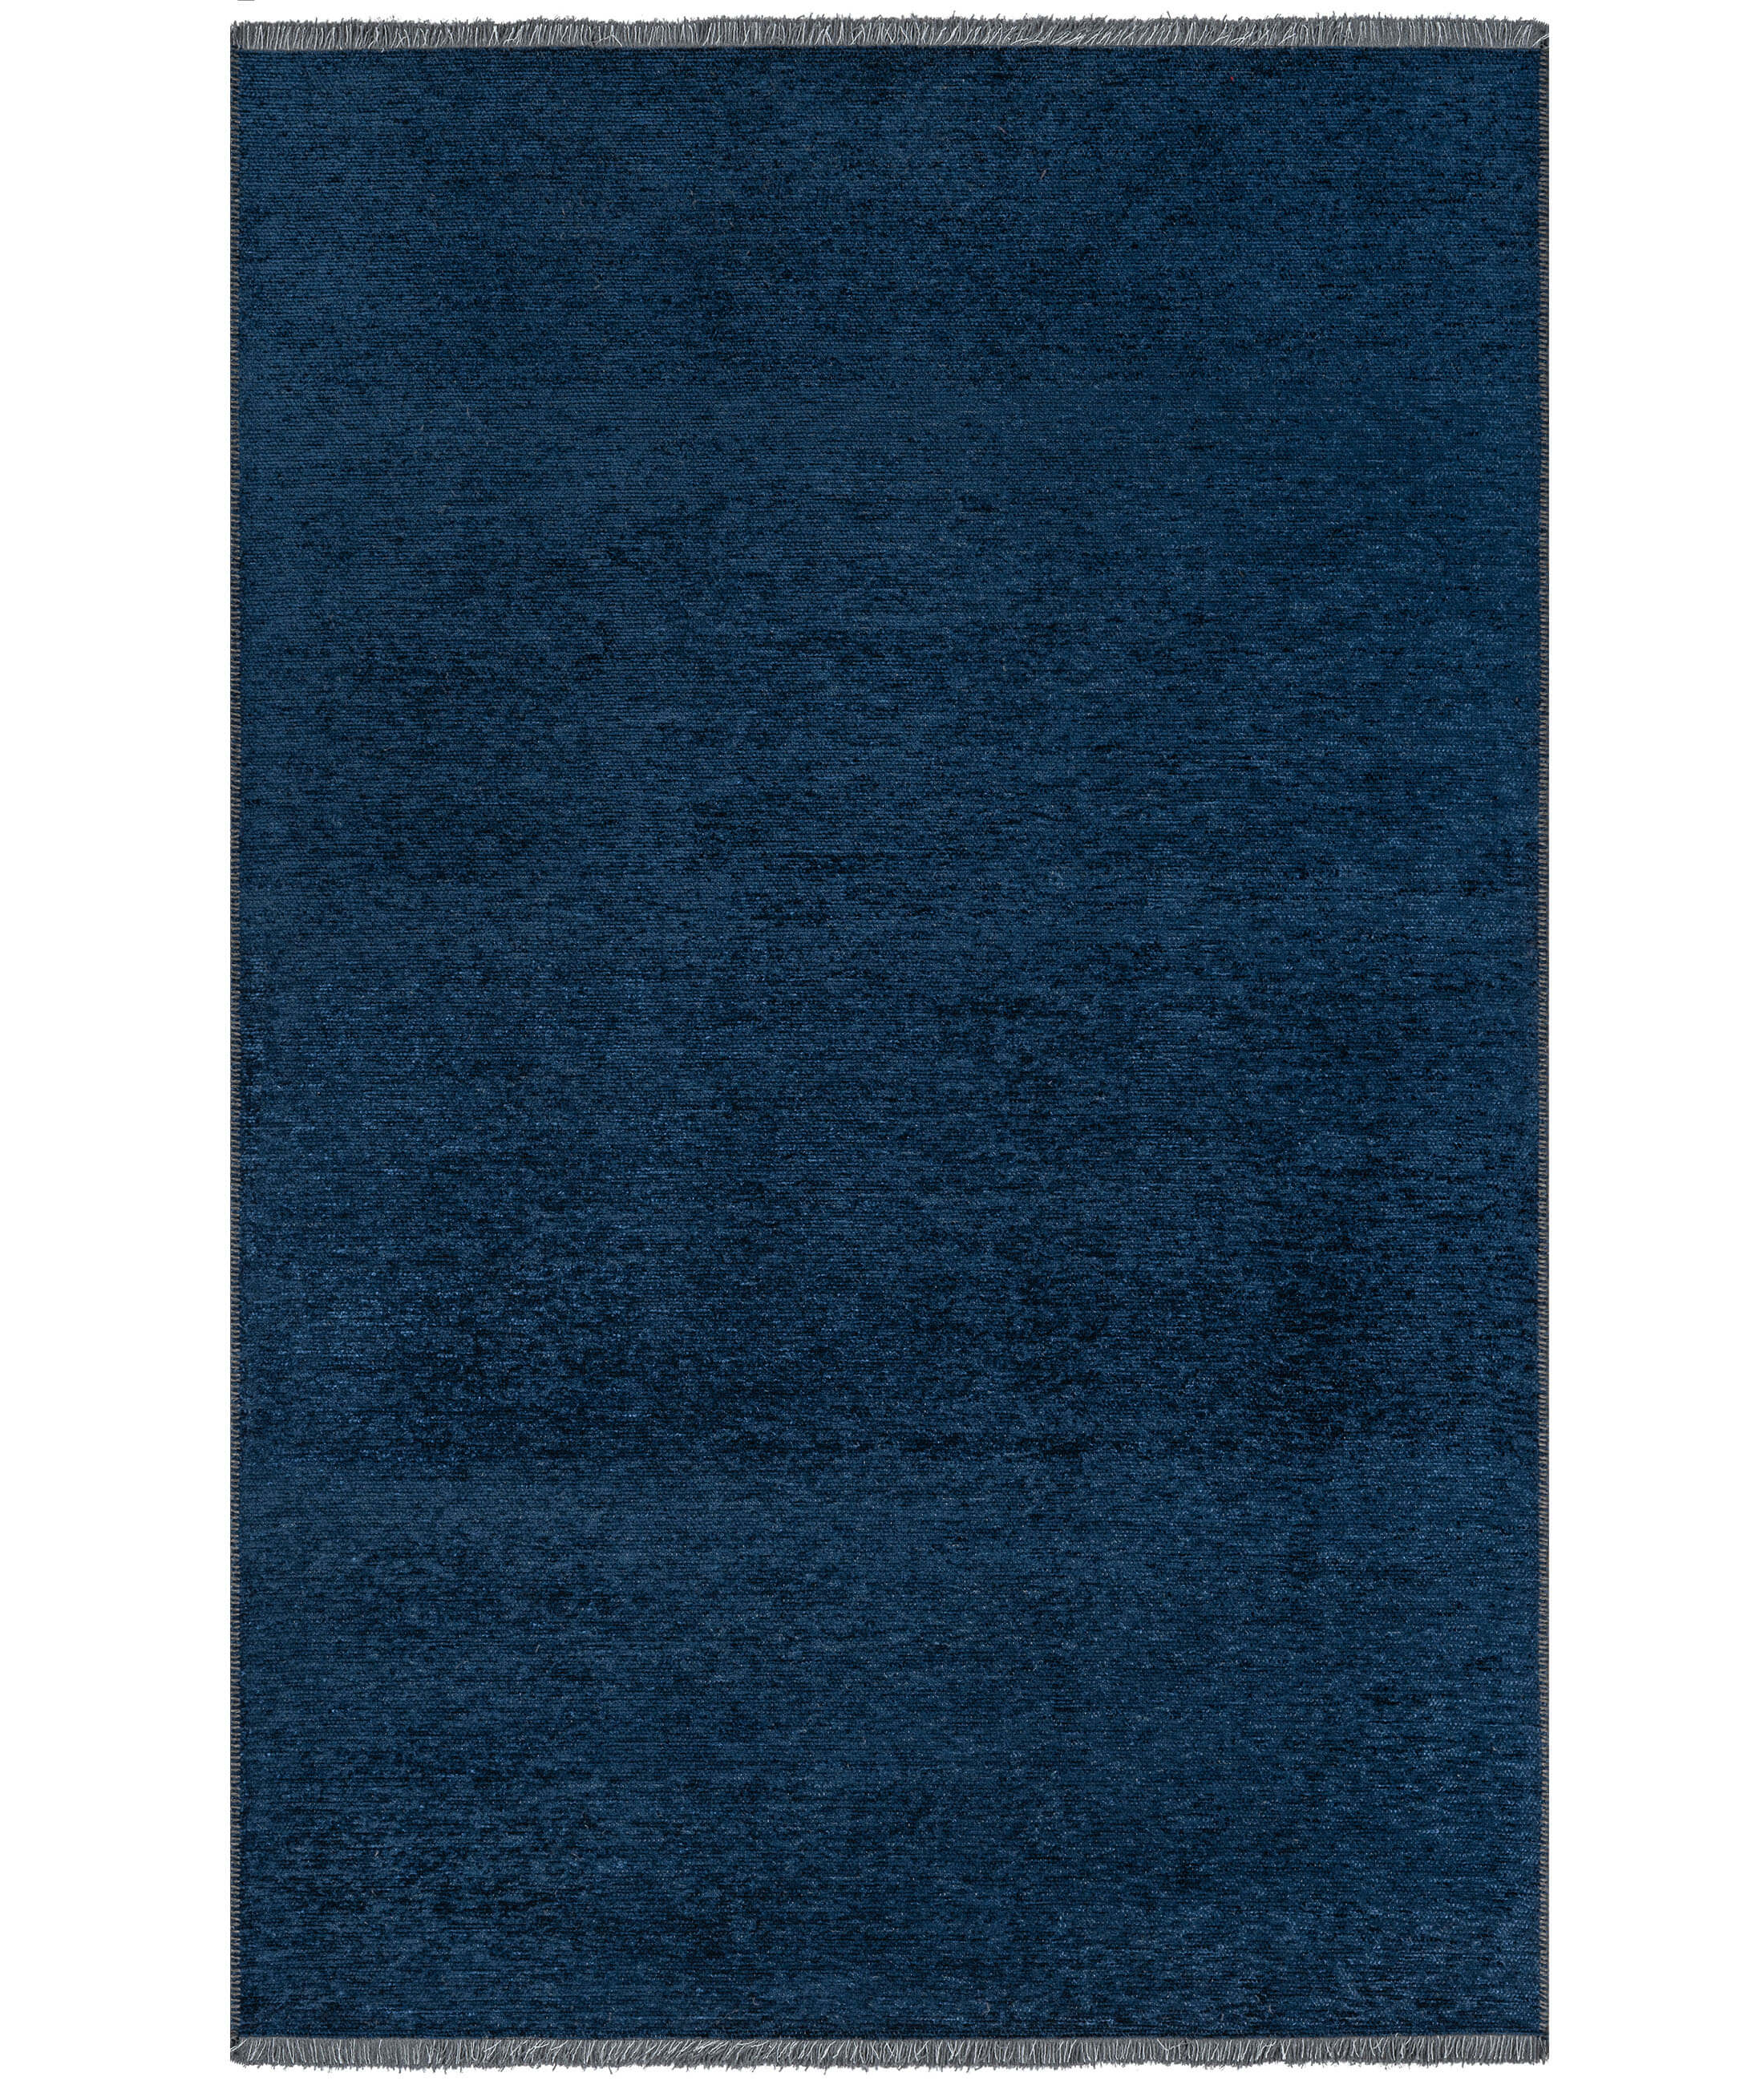 Toscana Navy Carpet 24021A